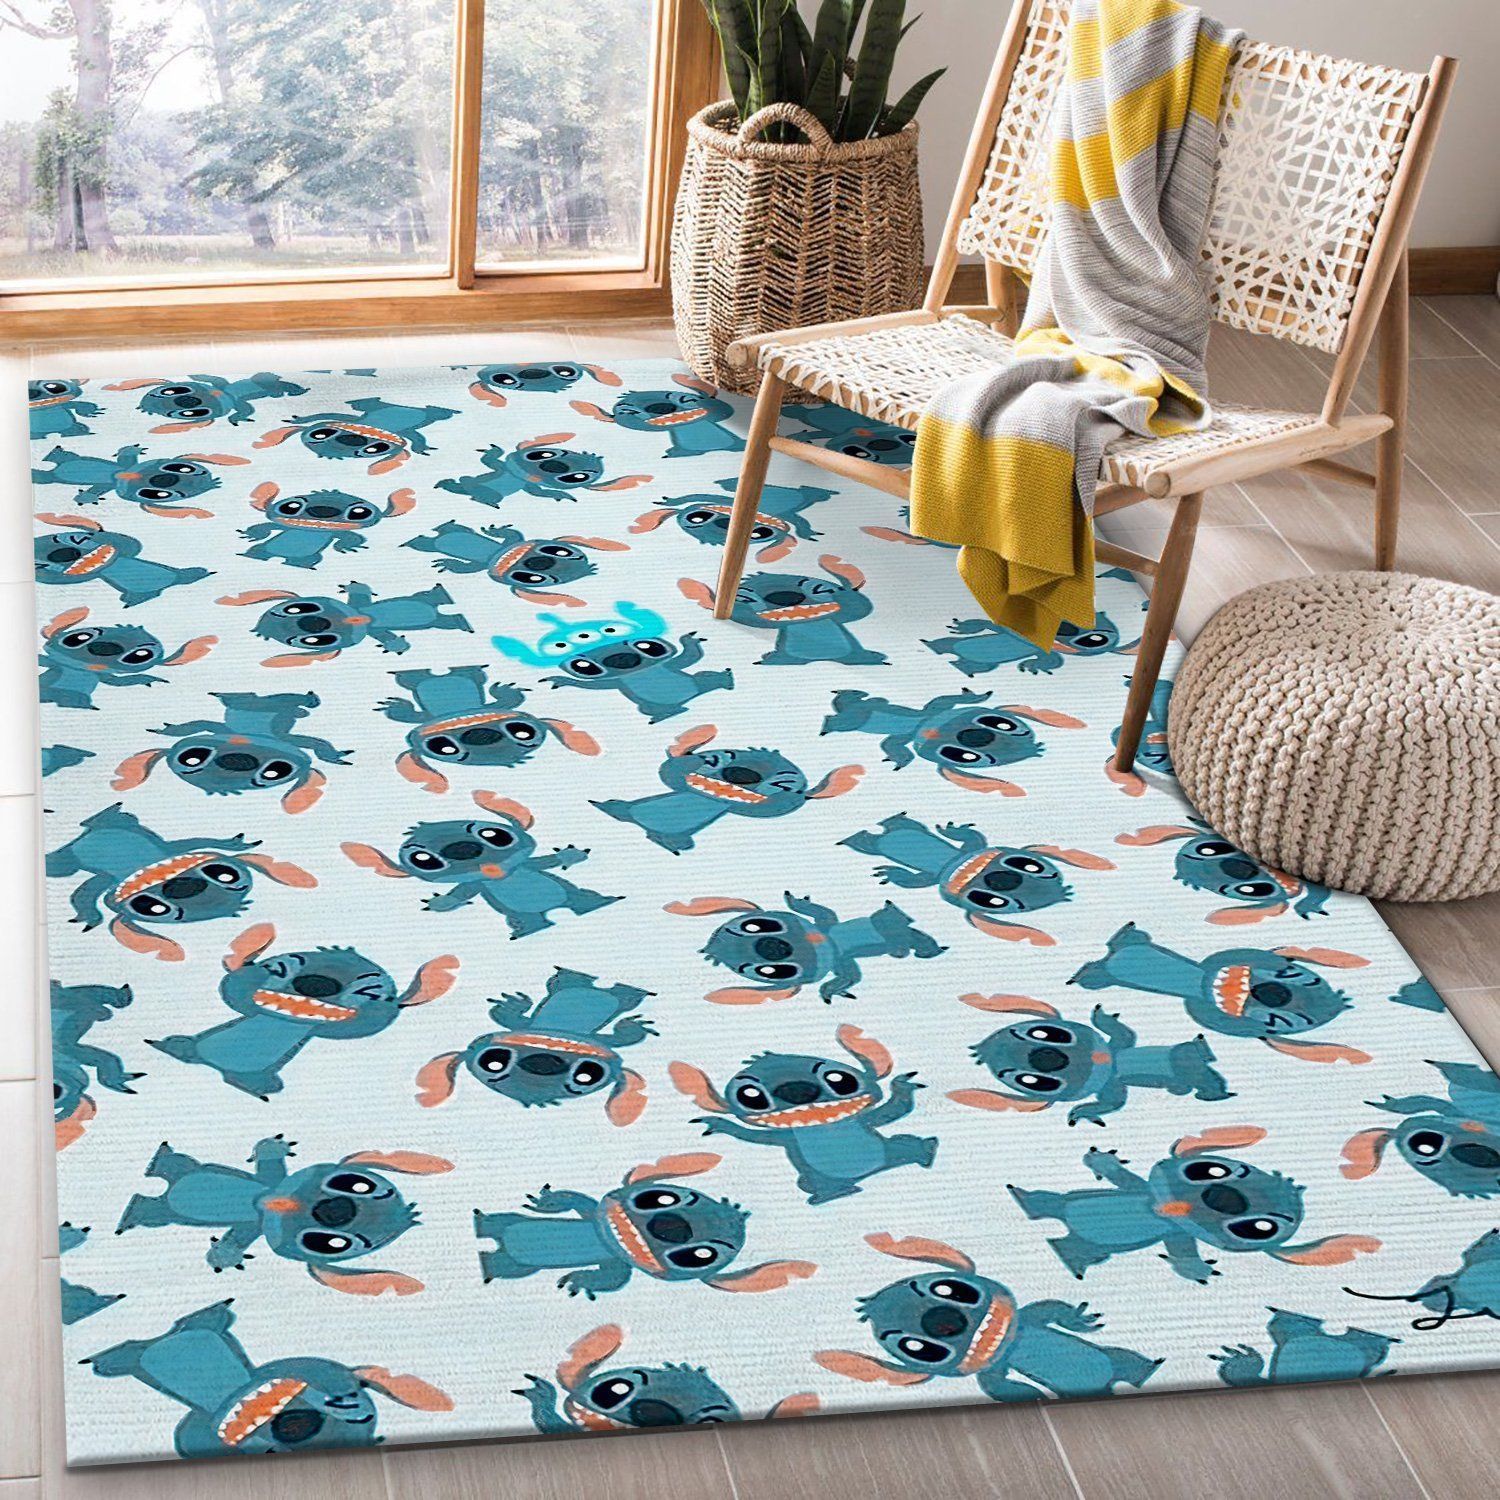 Stitch Disney Movies Area Rugs Living Room Carpet Floor Decor The US Decor - Indoor Outdoor Rugs